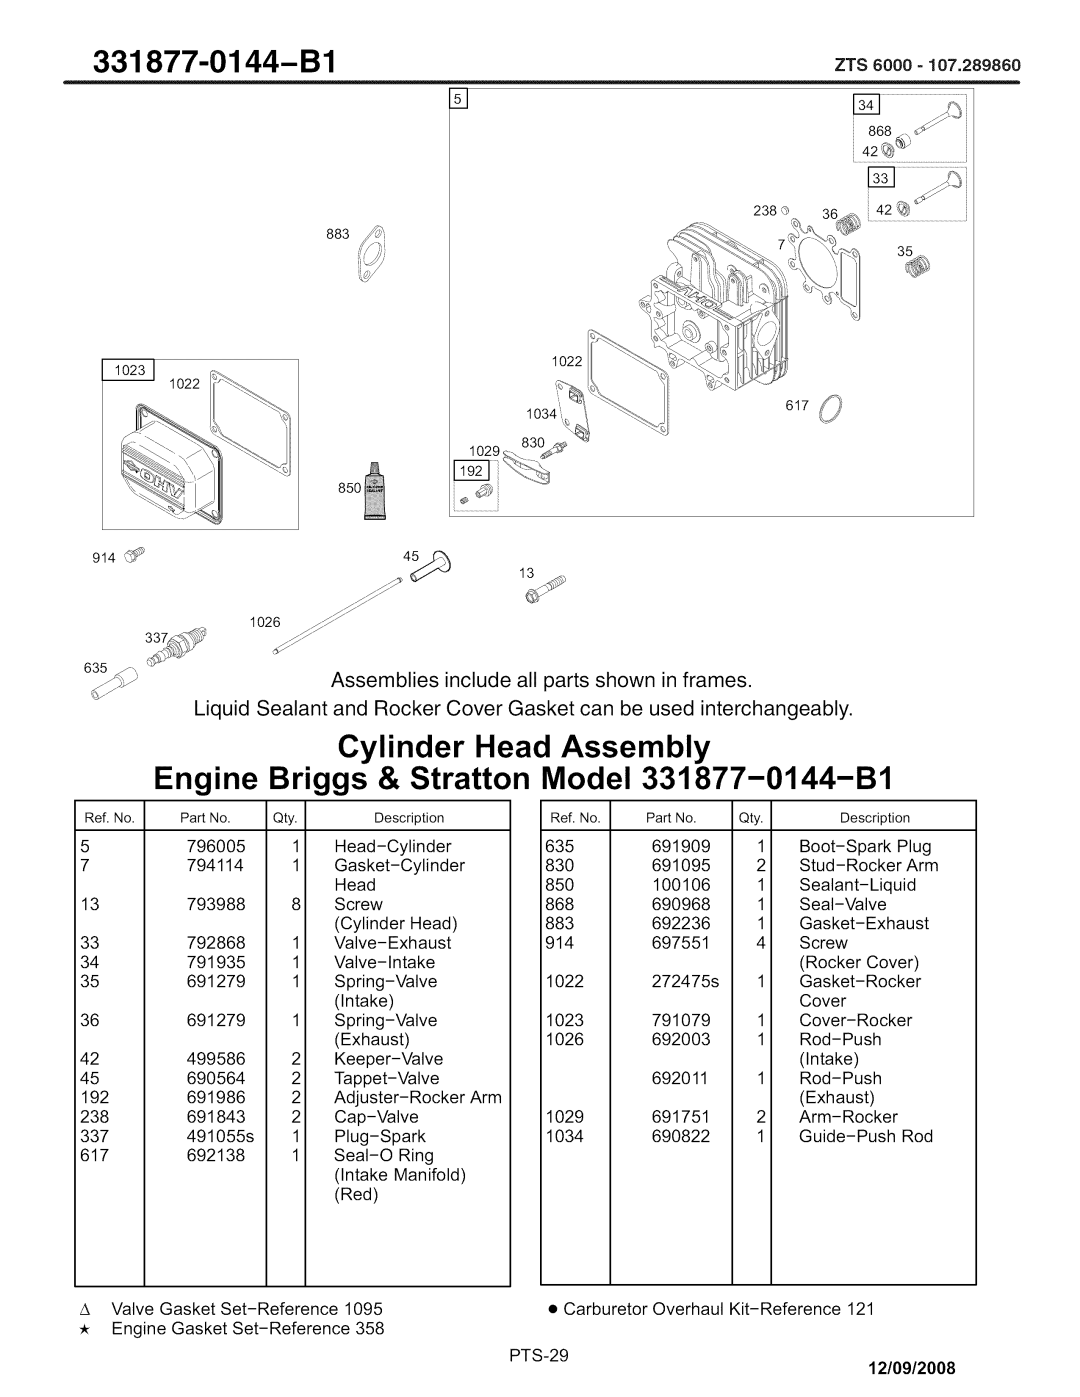 Craftsman ZTS 6000, 107.289860 manual Cylinder Head Assembly, Engine Briggs & Stratton Model 331877-0144-B1 